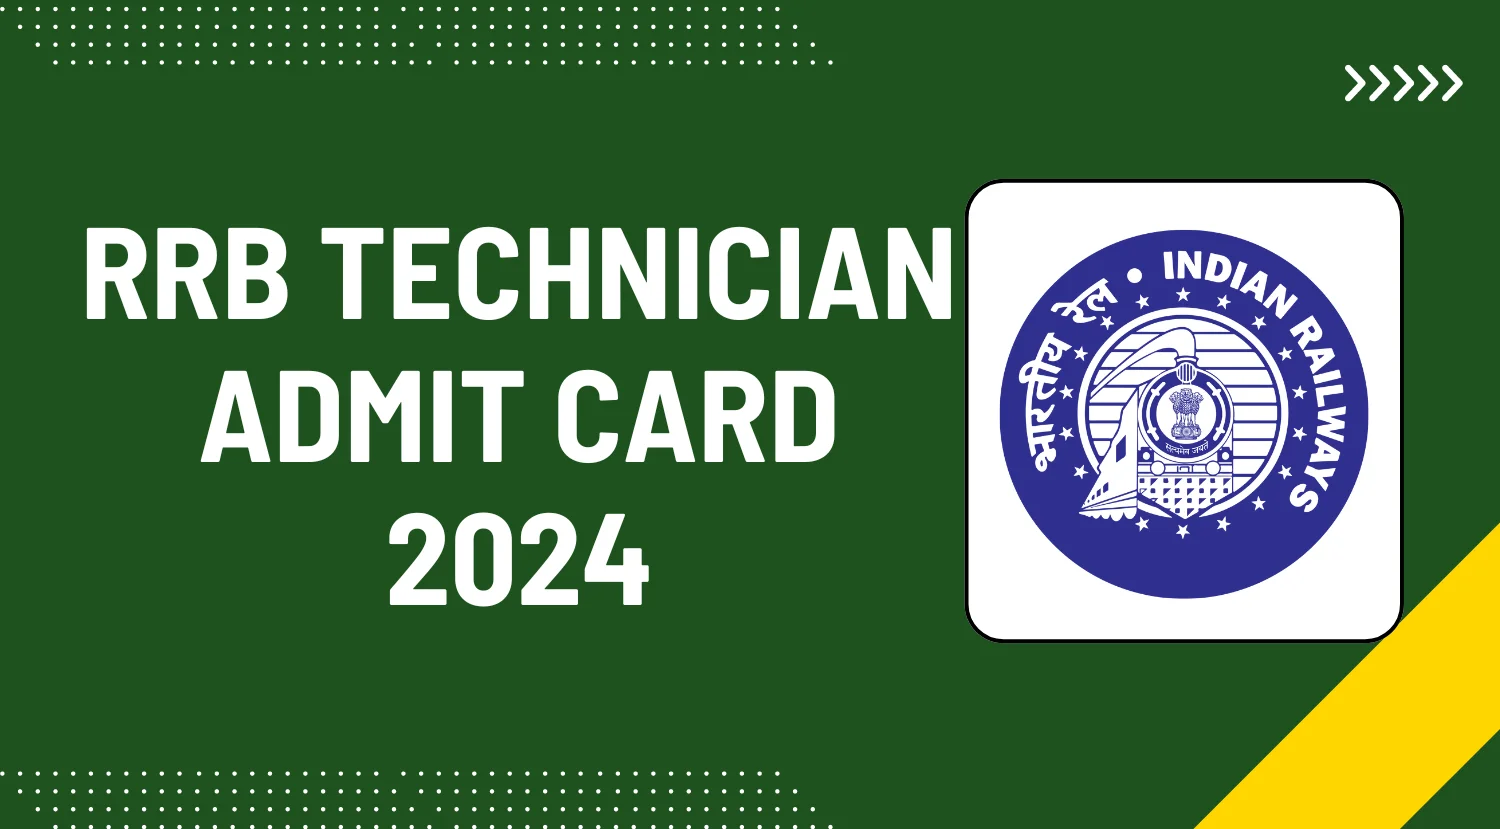 RRB Technician Admit Card 2024